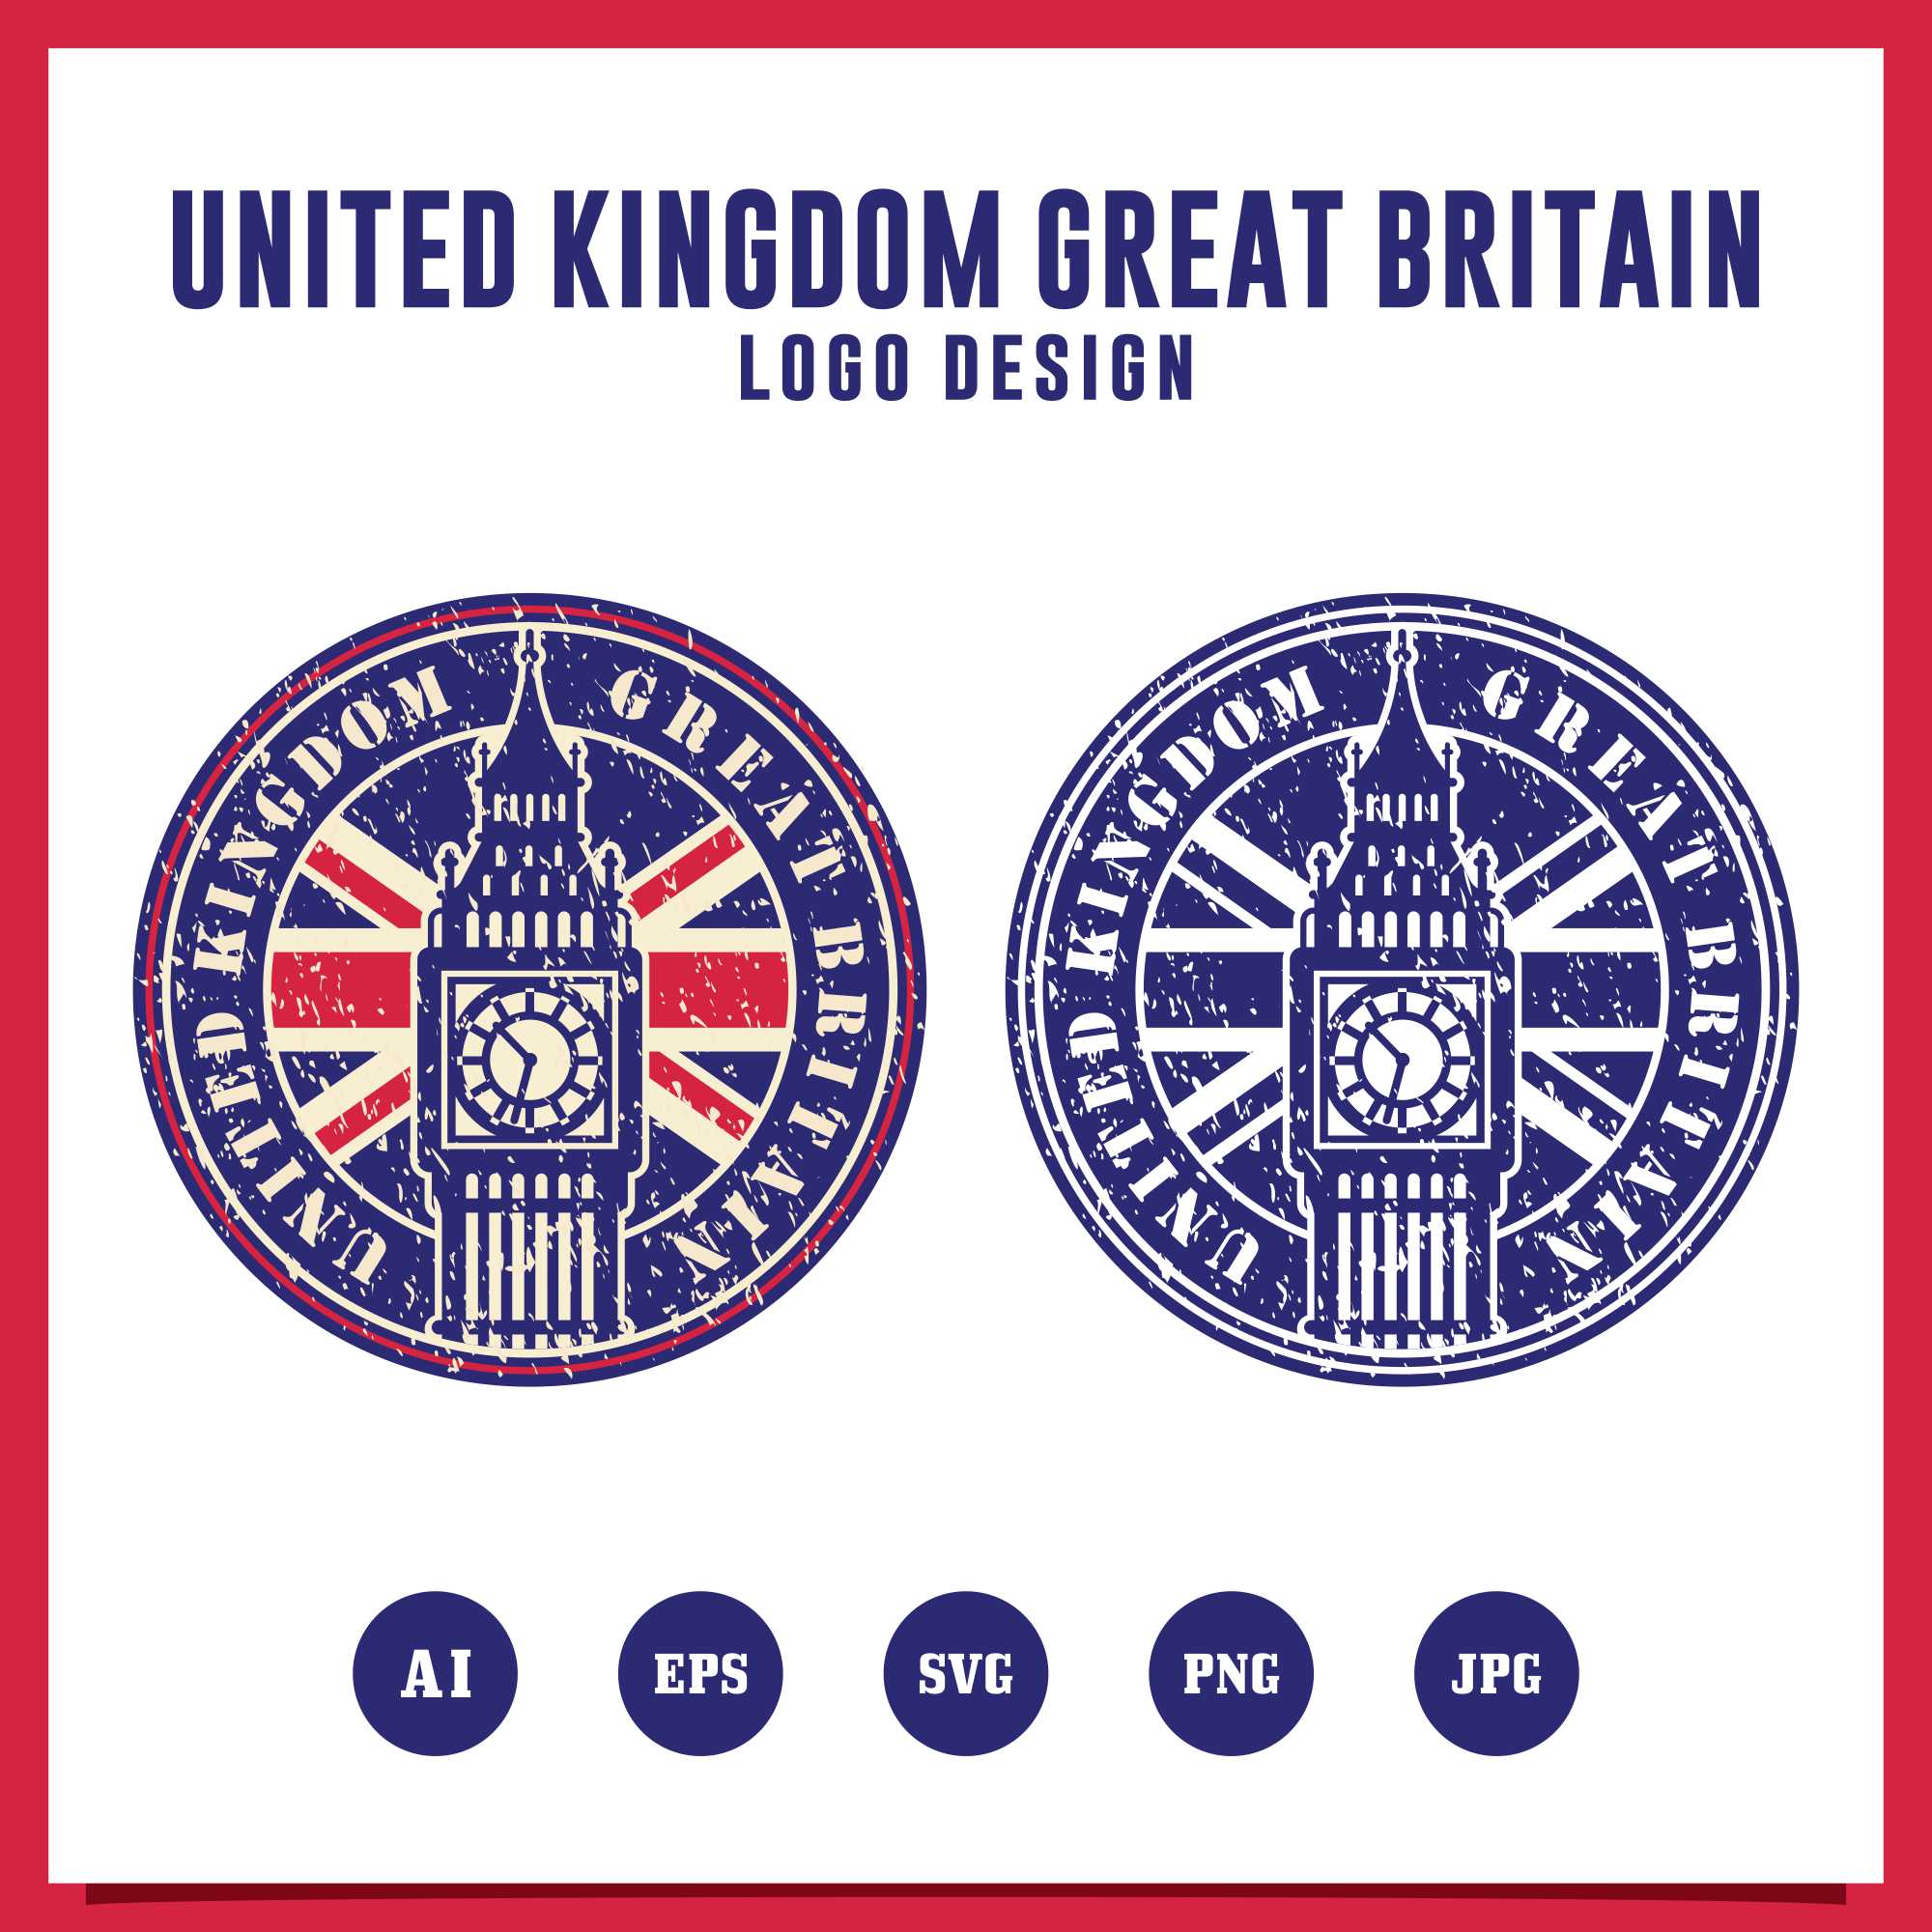 United kingdom great britania logo design - $4 cover image.